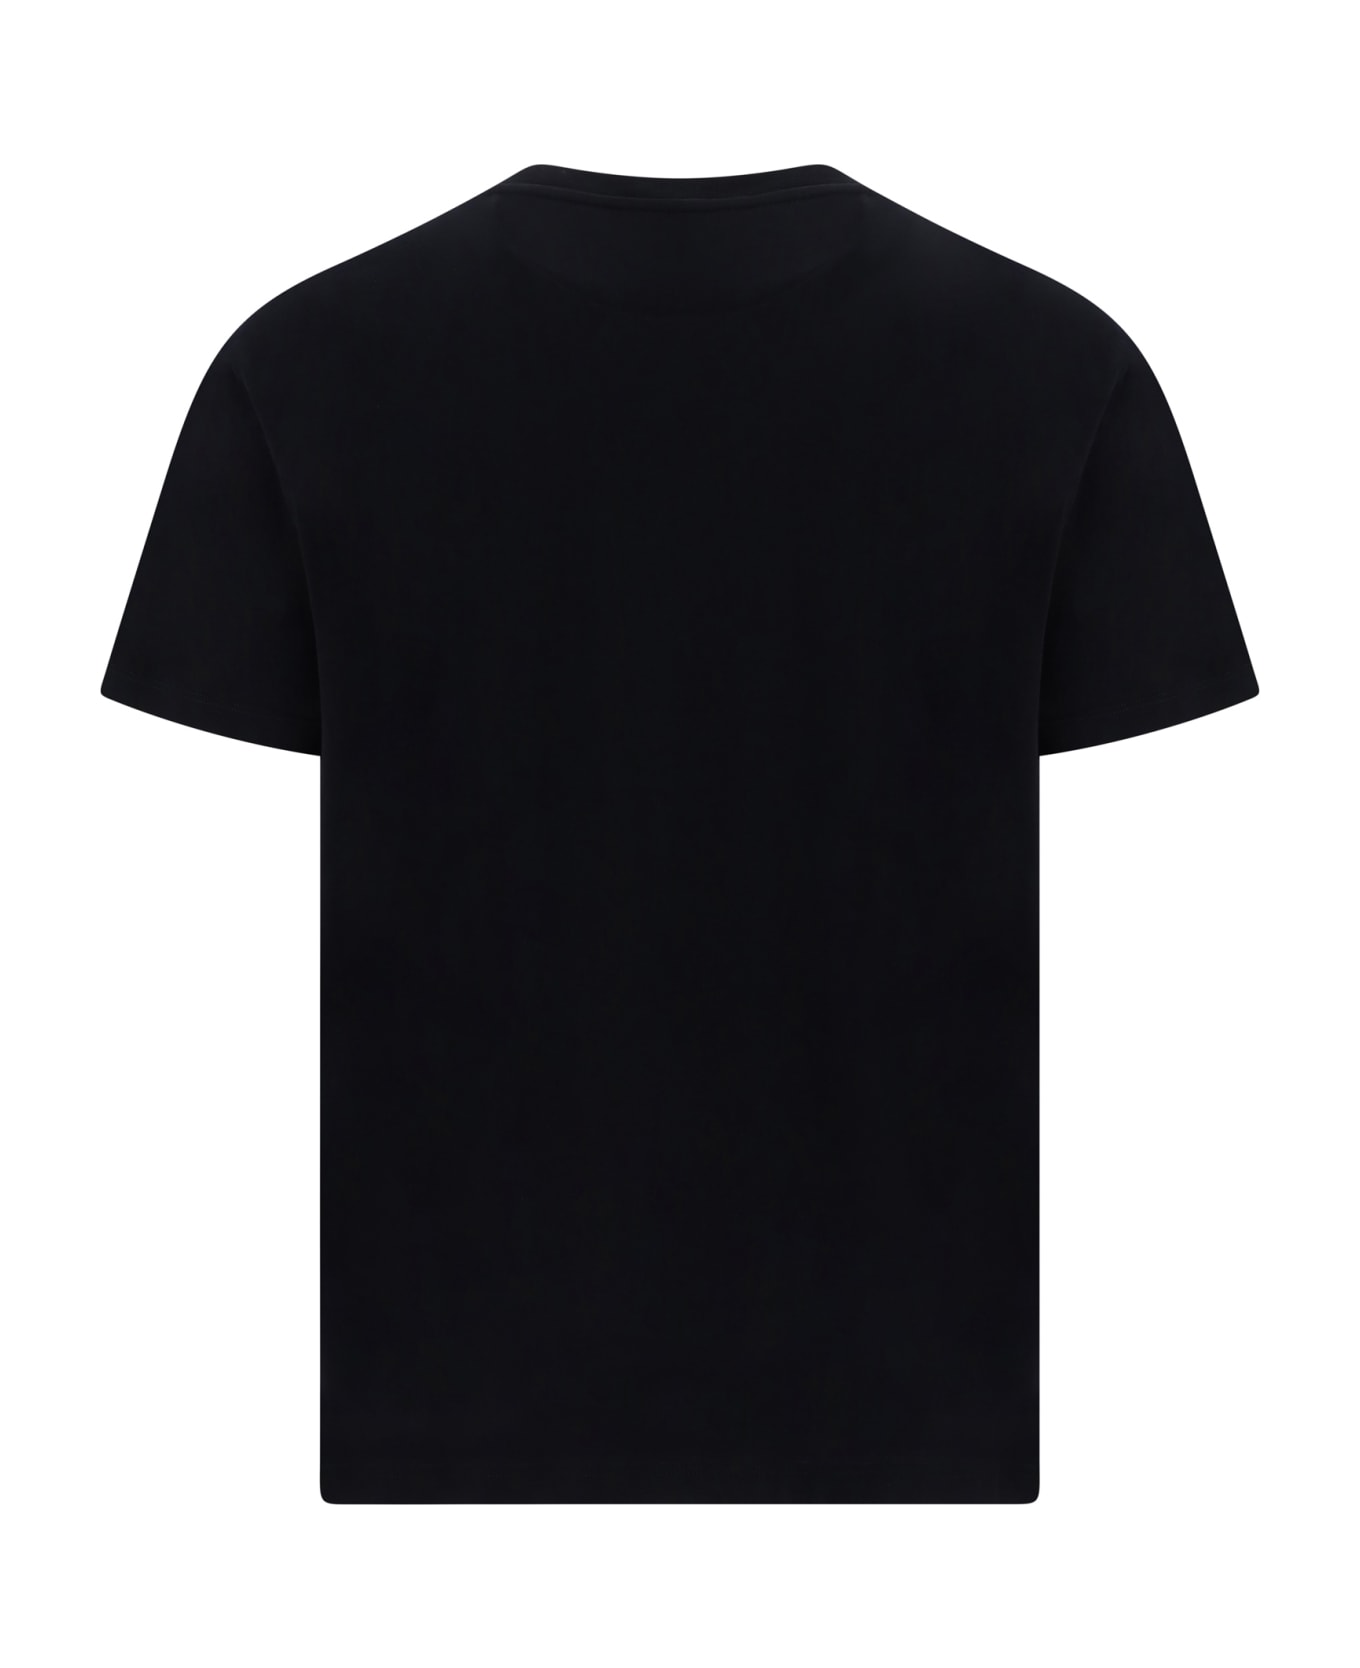 Valentino Garavani T-shirt - Nero/grigio シャツ